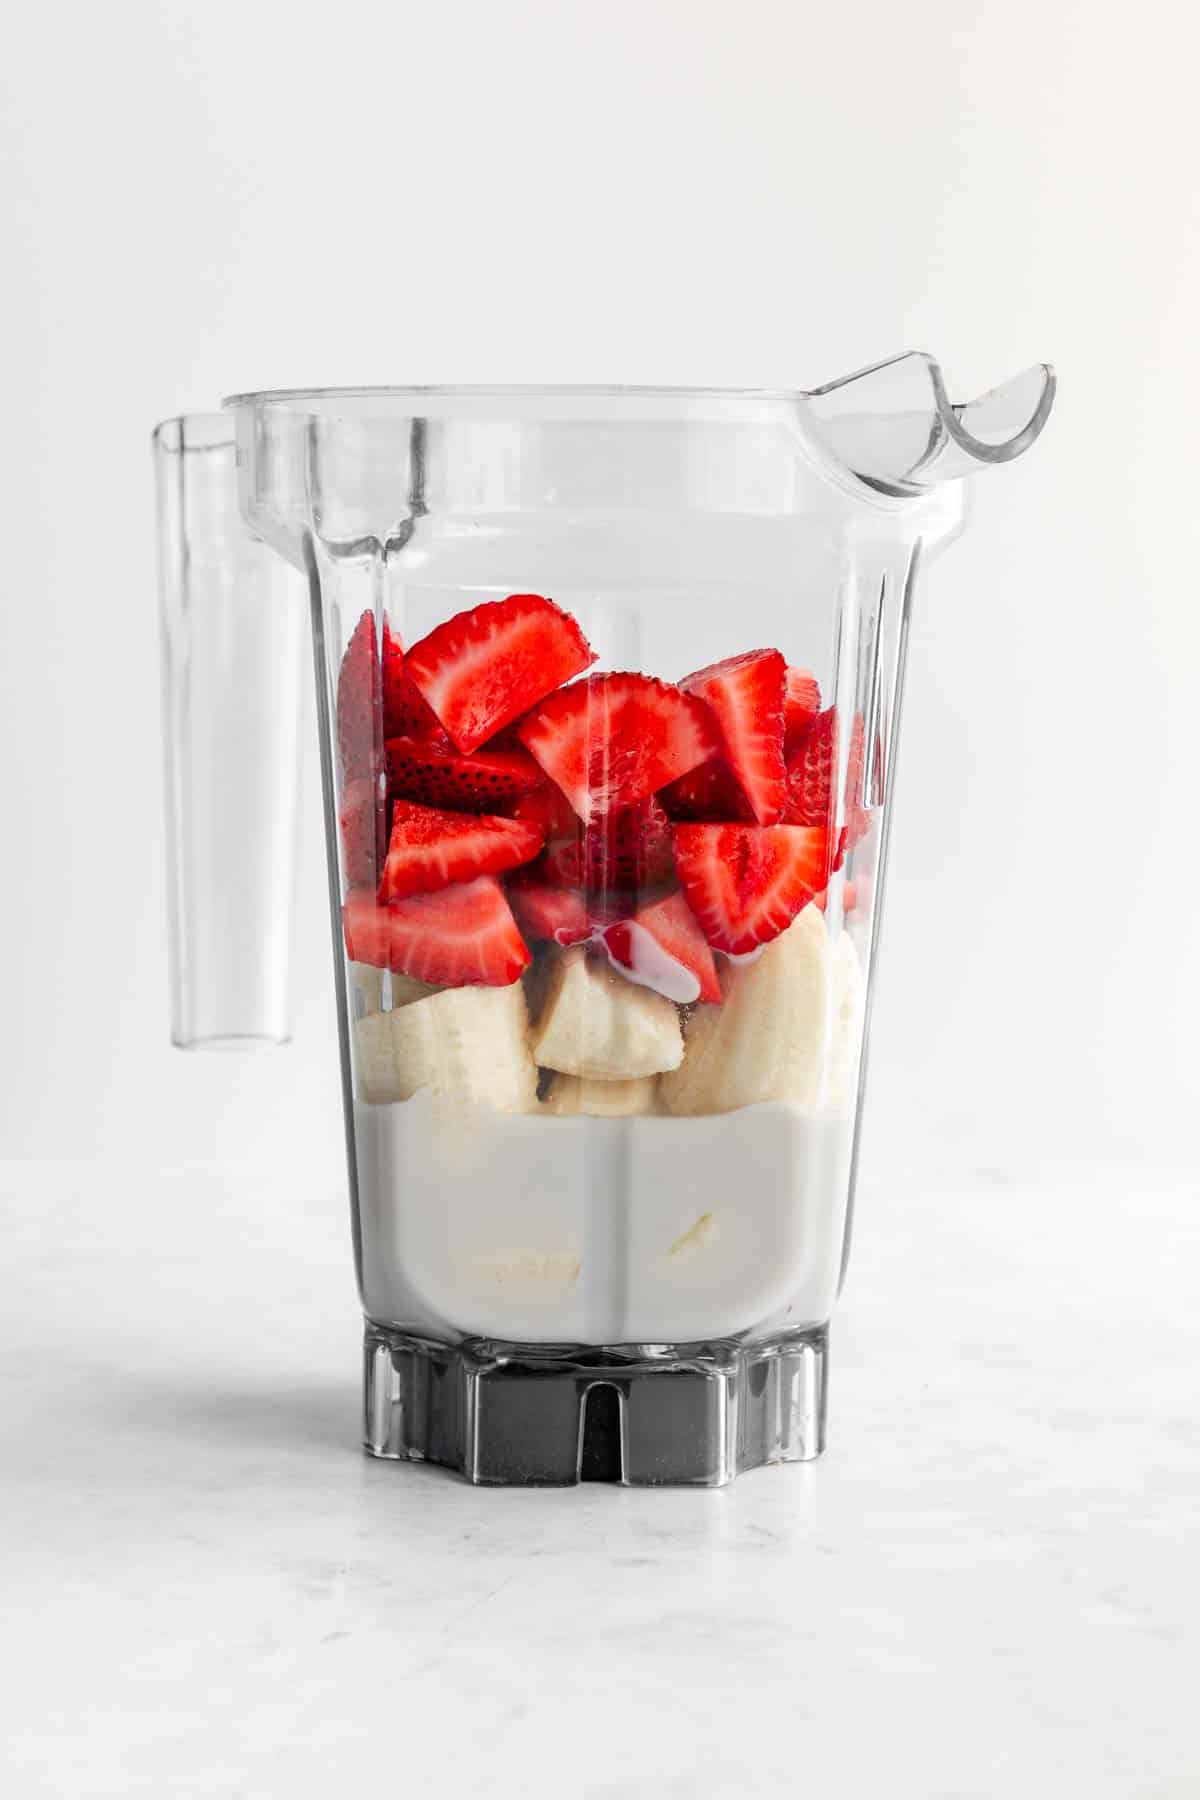 strawberries, banana, and almond milk inside a vitamix blender